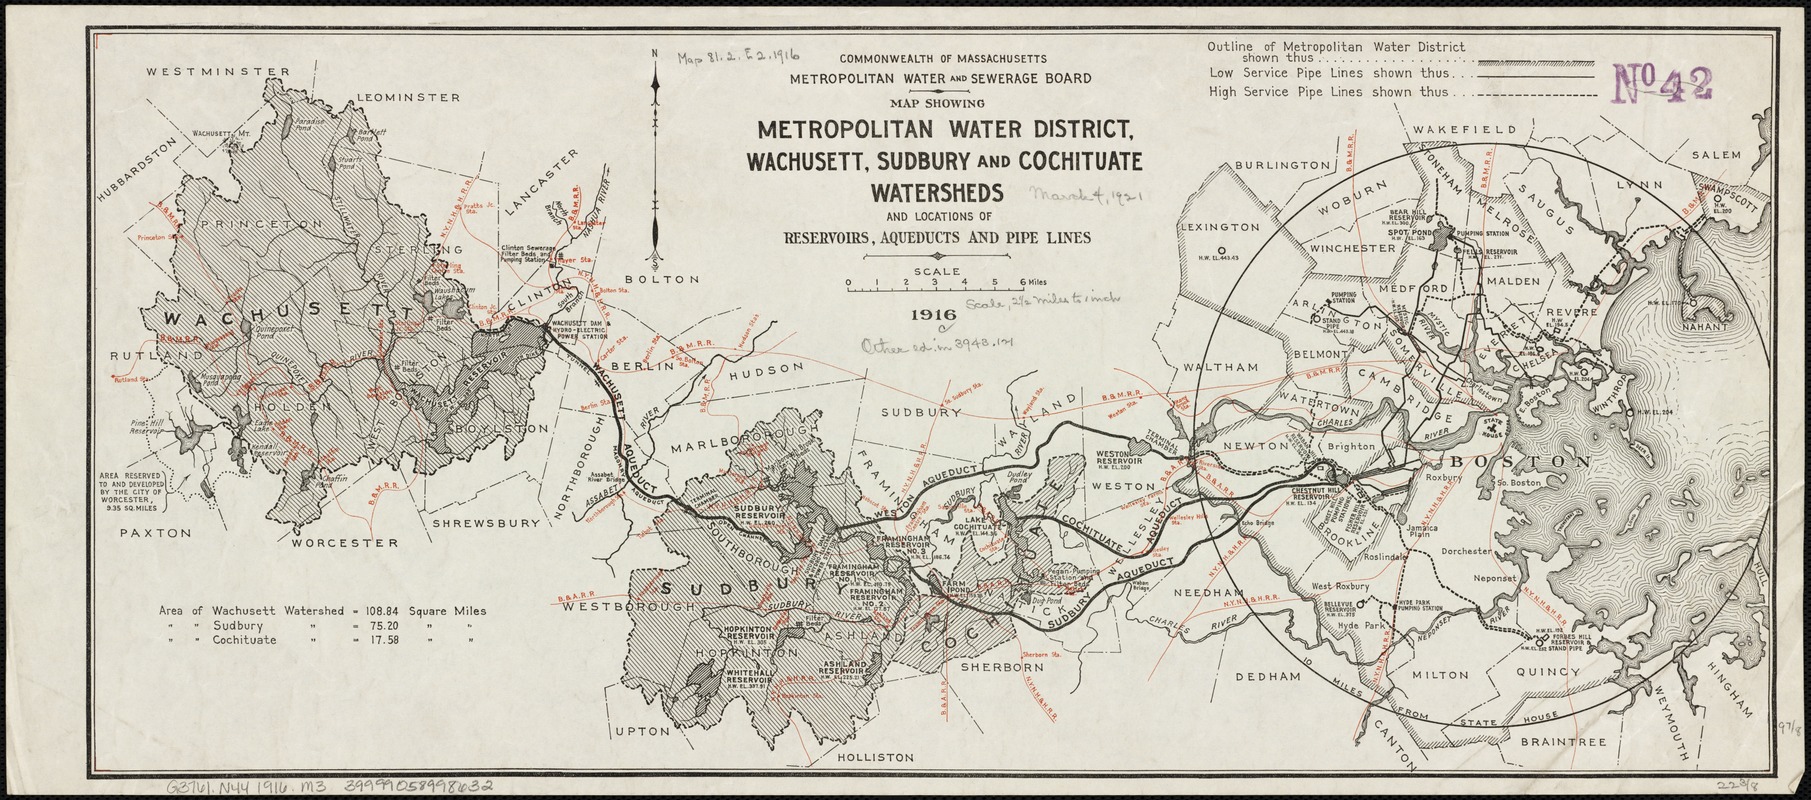 map-showing-metropolitan-water-district-wachusett-sudbury-and